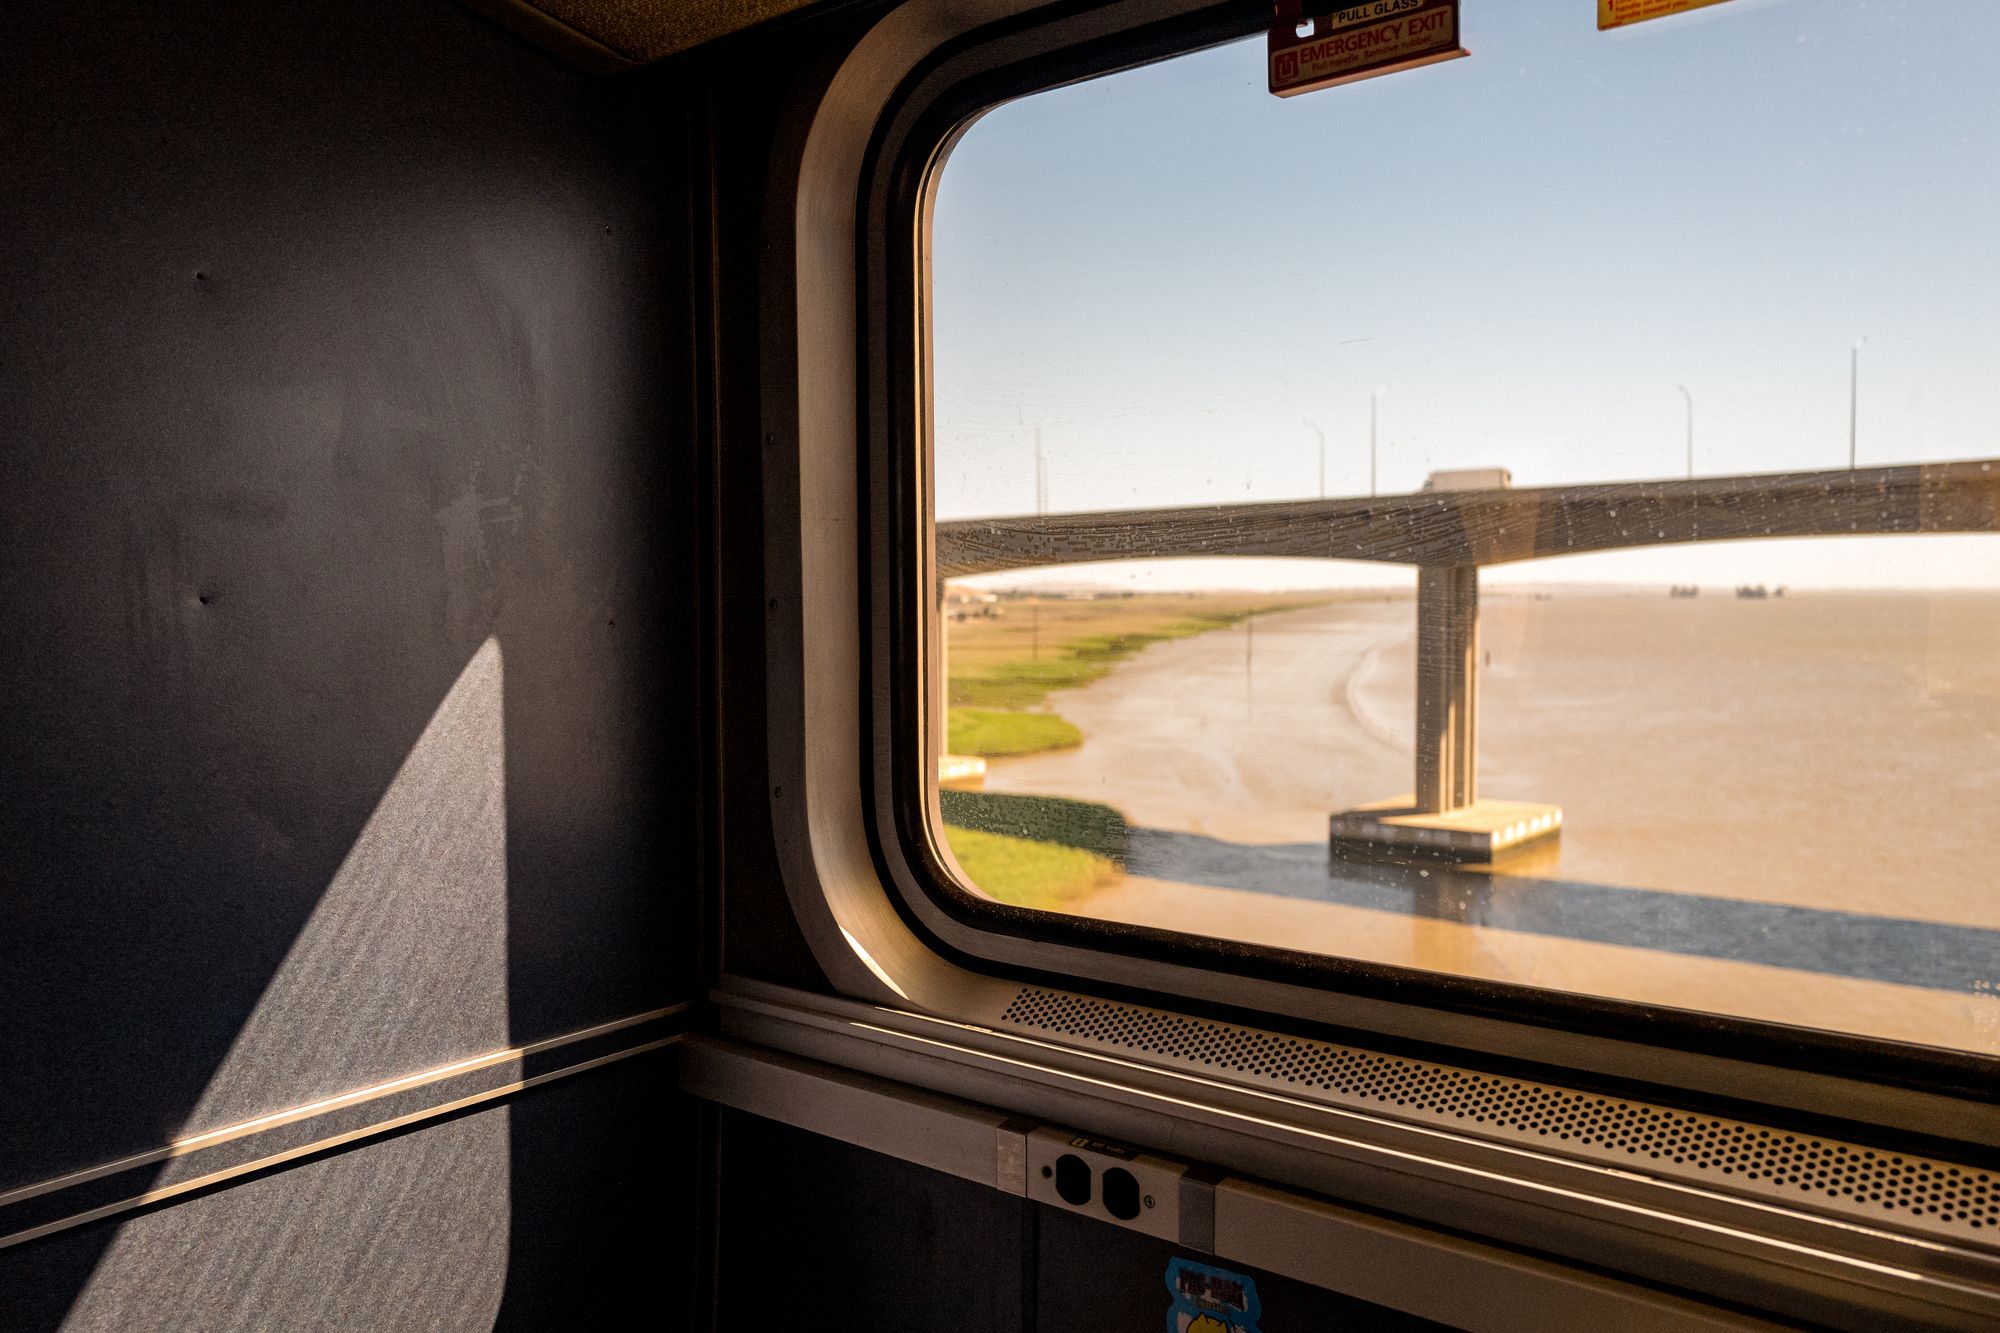 Amtrak Coach Class Window Seat